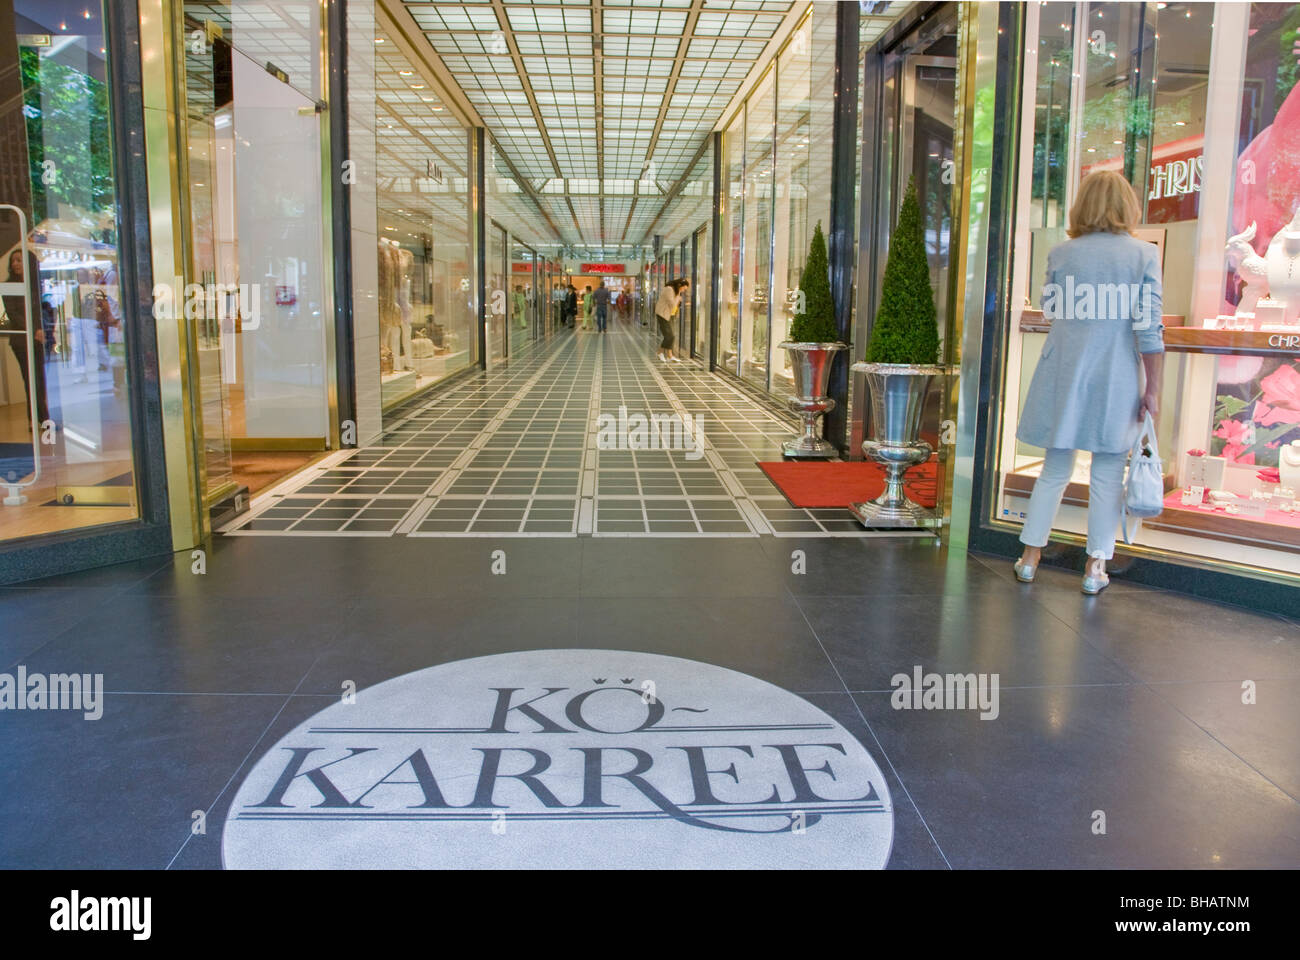 SHOPPING ARCADE KO-KARREE AT KONIGSALLEE SHOPPING STREET IN DUSSELDORF, NORTH RHINE WHESTPHALIA, GERMANY Stock Photo